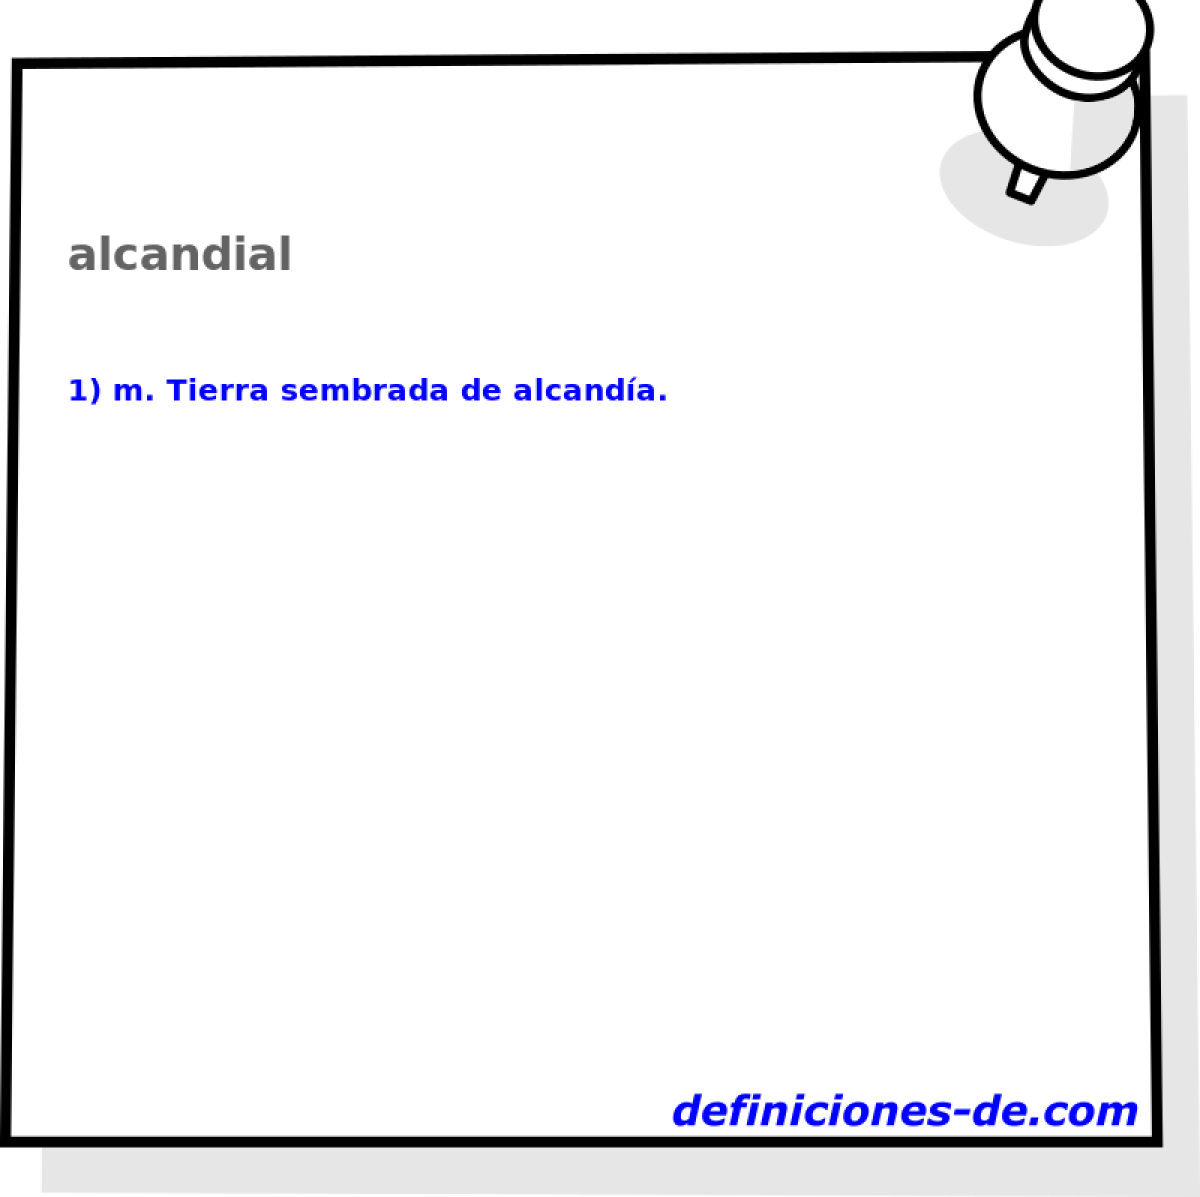 alcandial 